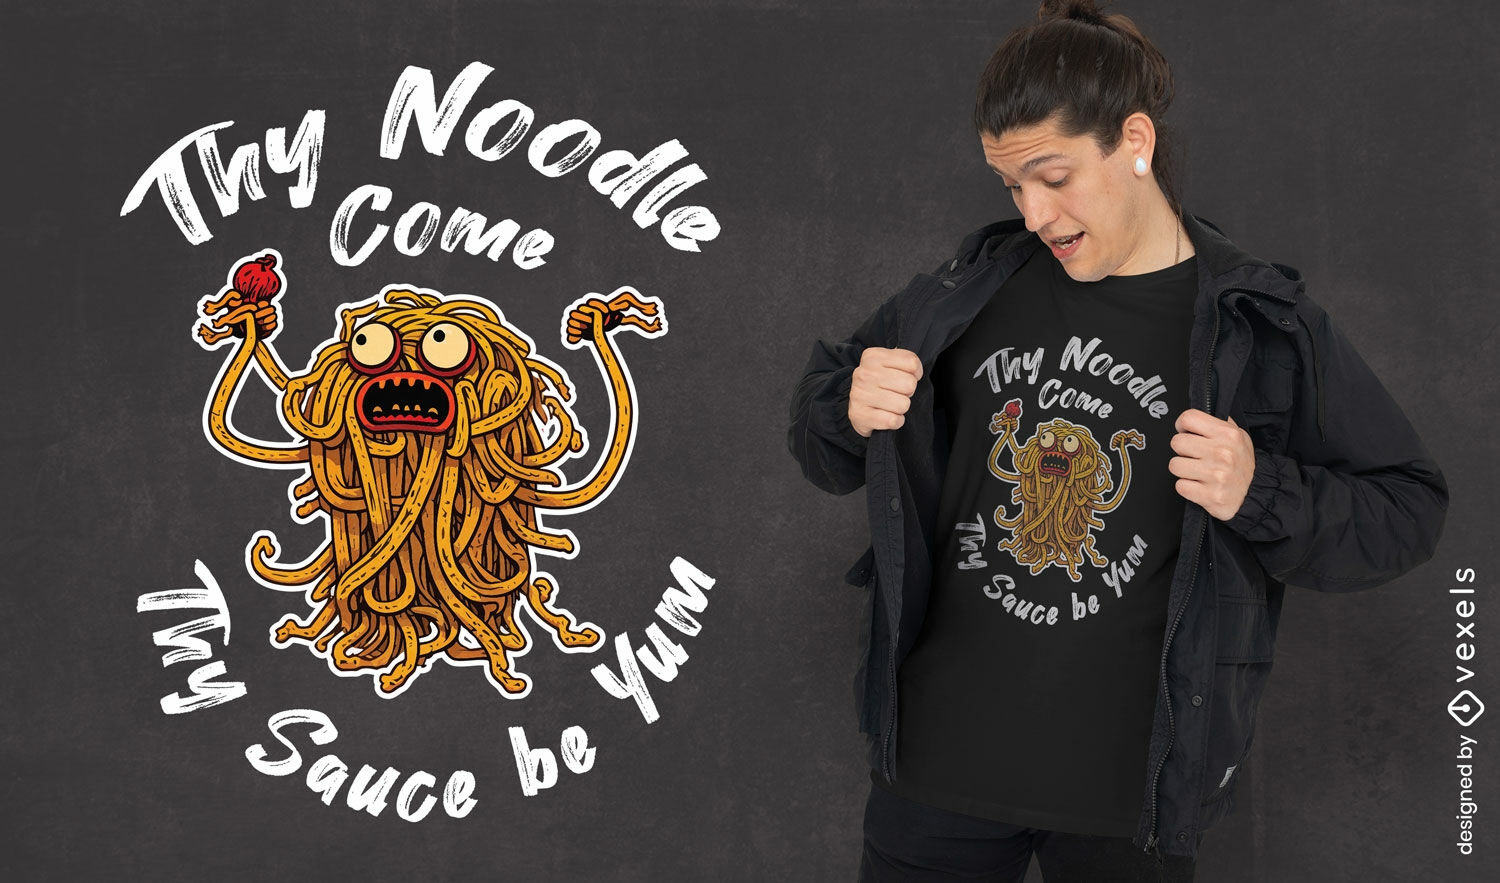 T-Shirt-Design mit Spaghetti-Monster-Zitat